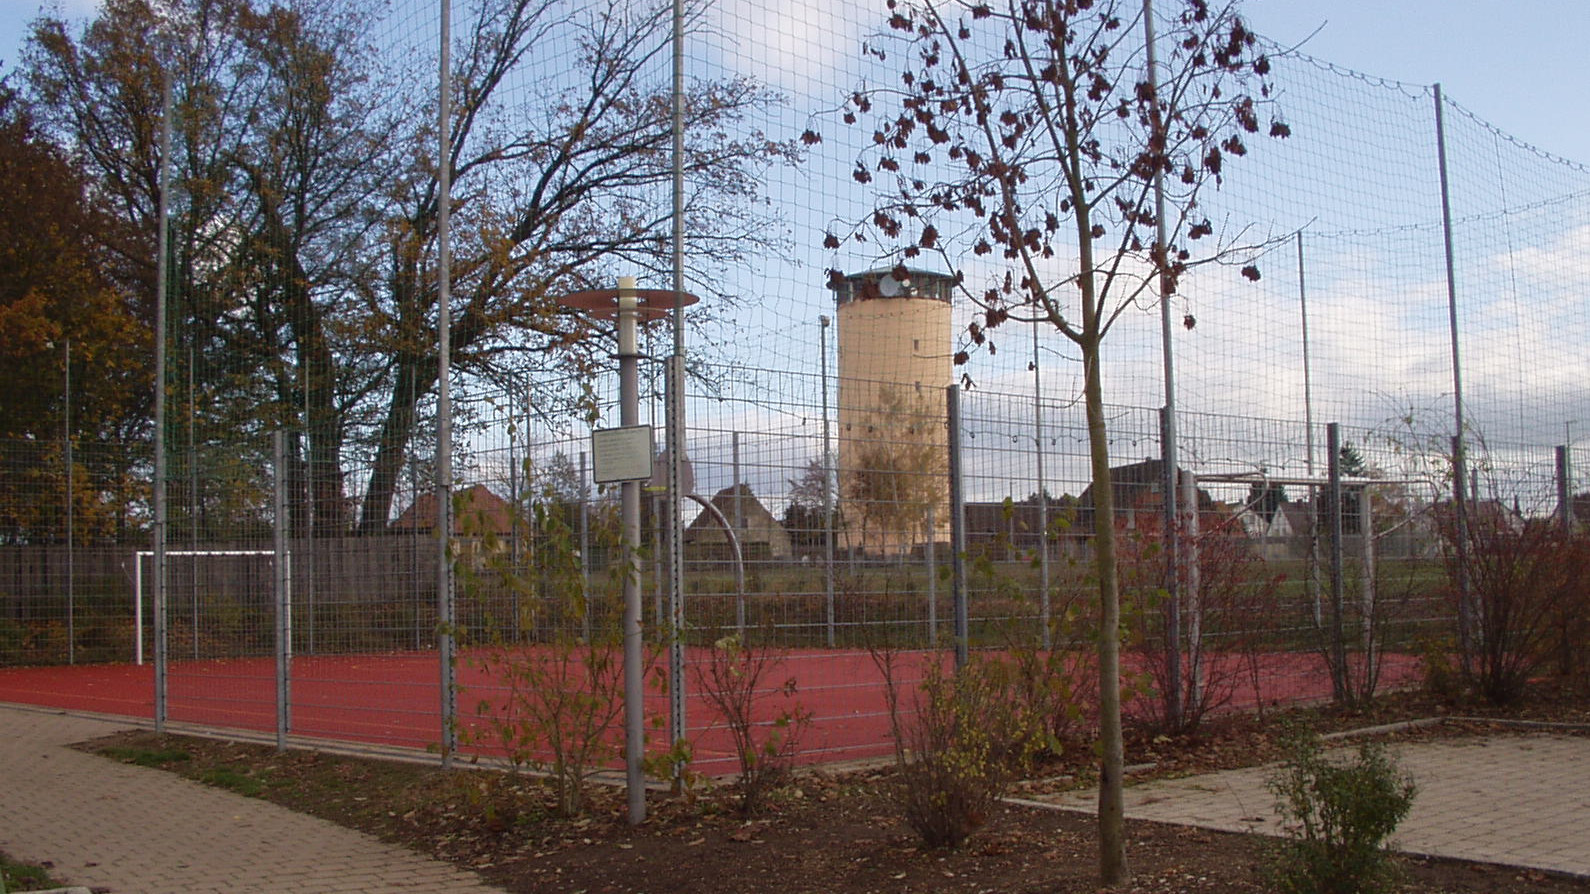  Spielplatz Förderschule 